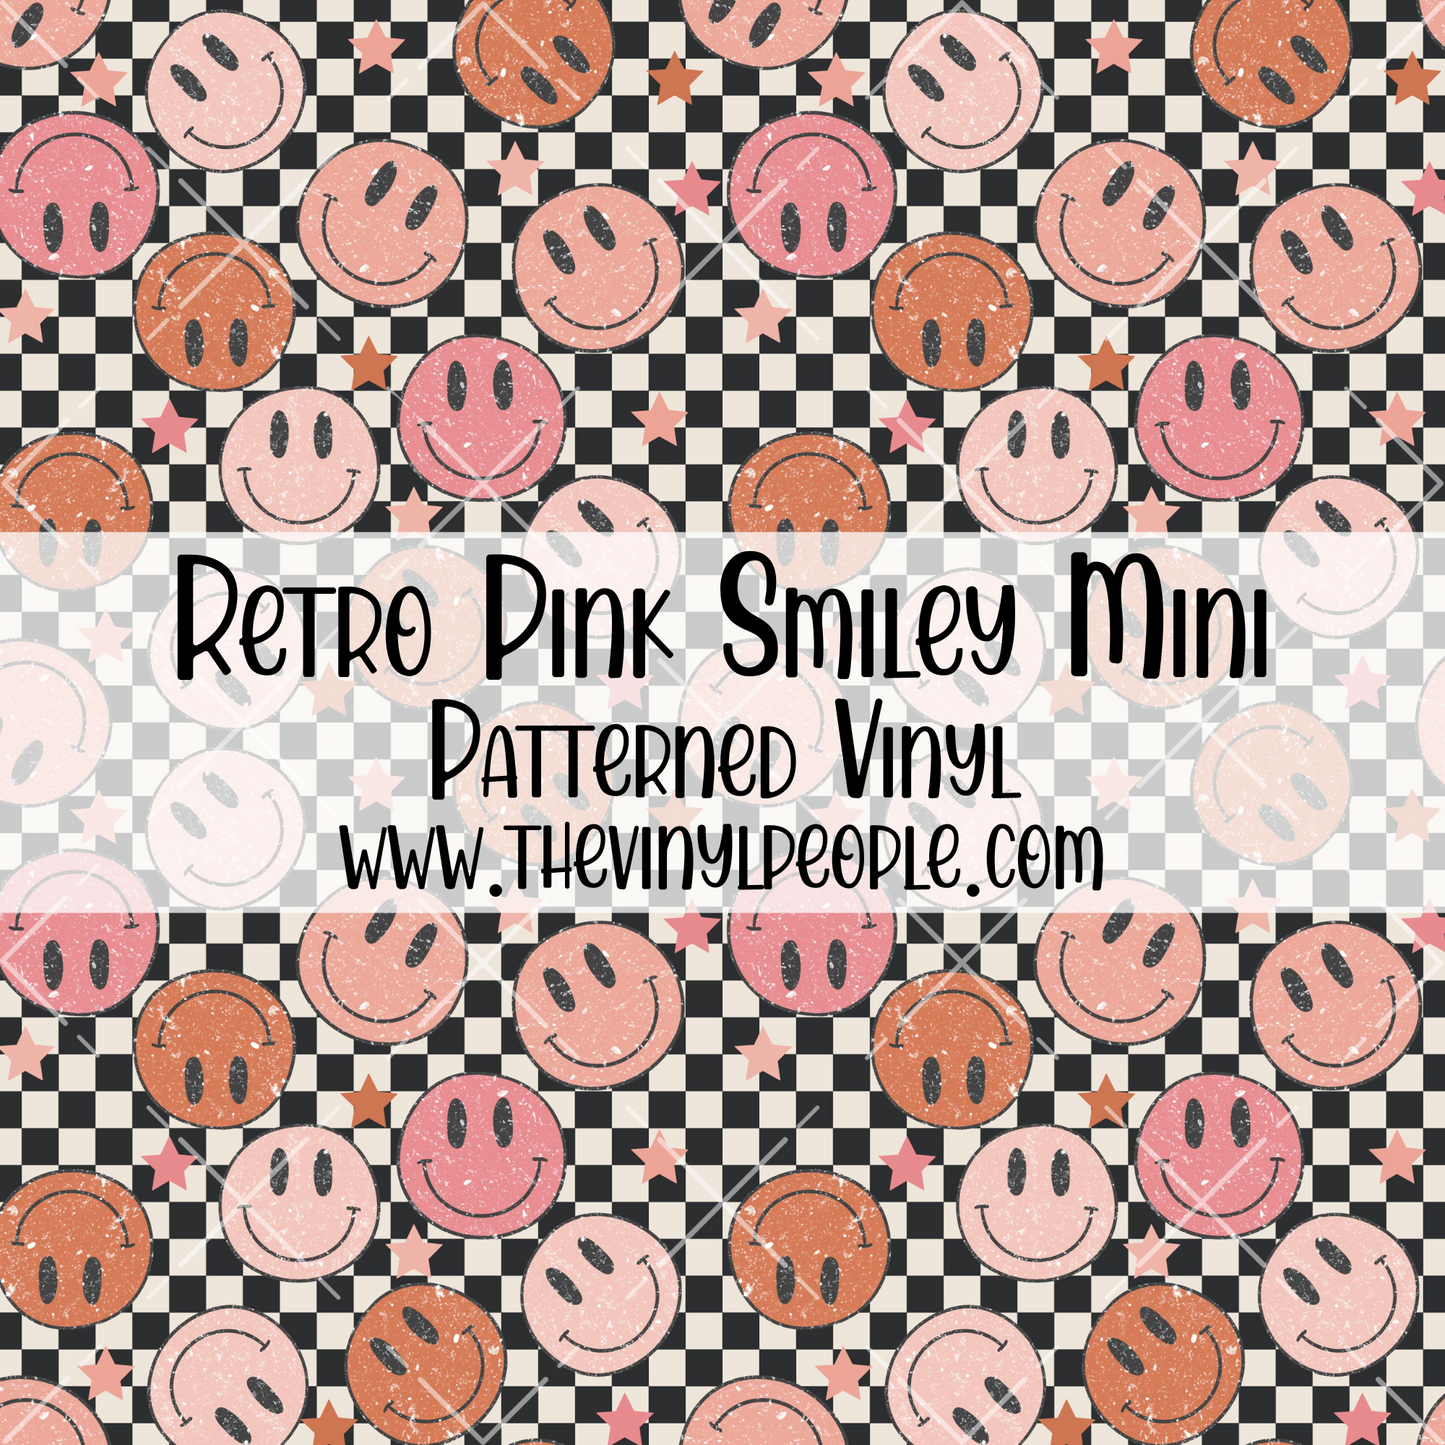 Retro Pink Smiley Patterned Vinyl